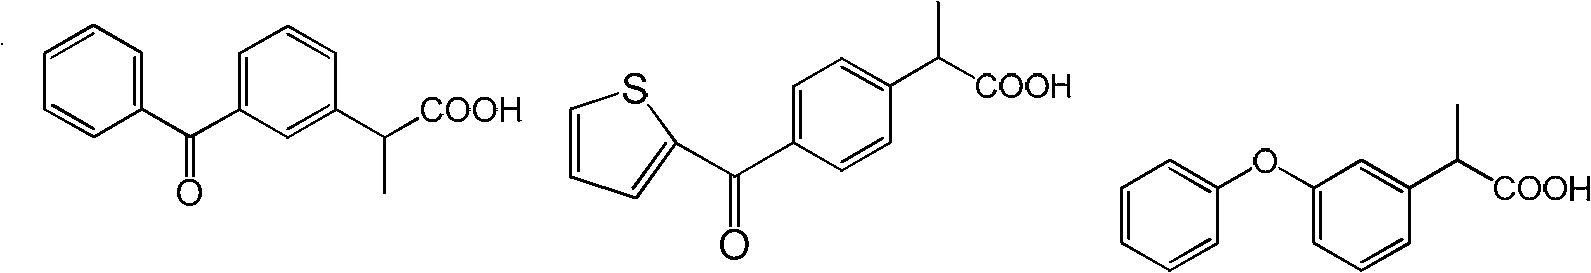 Method for synthesizing ibuprofen and analogues thereof